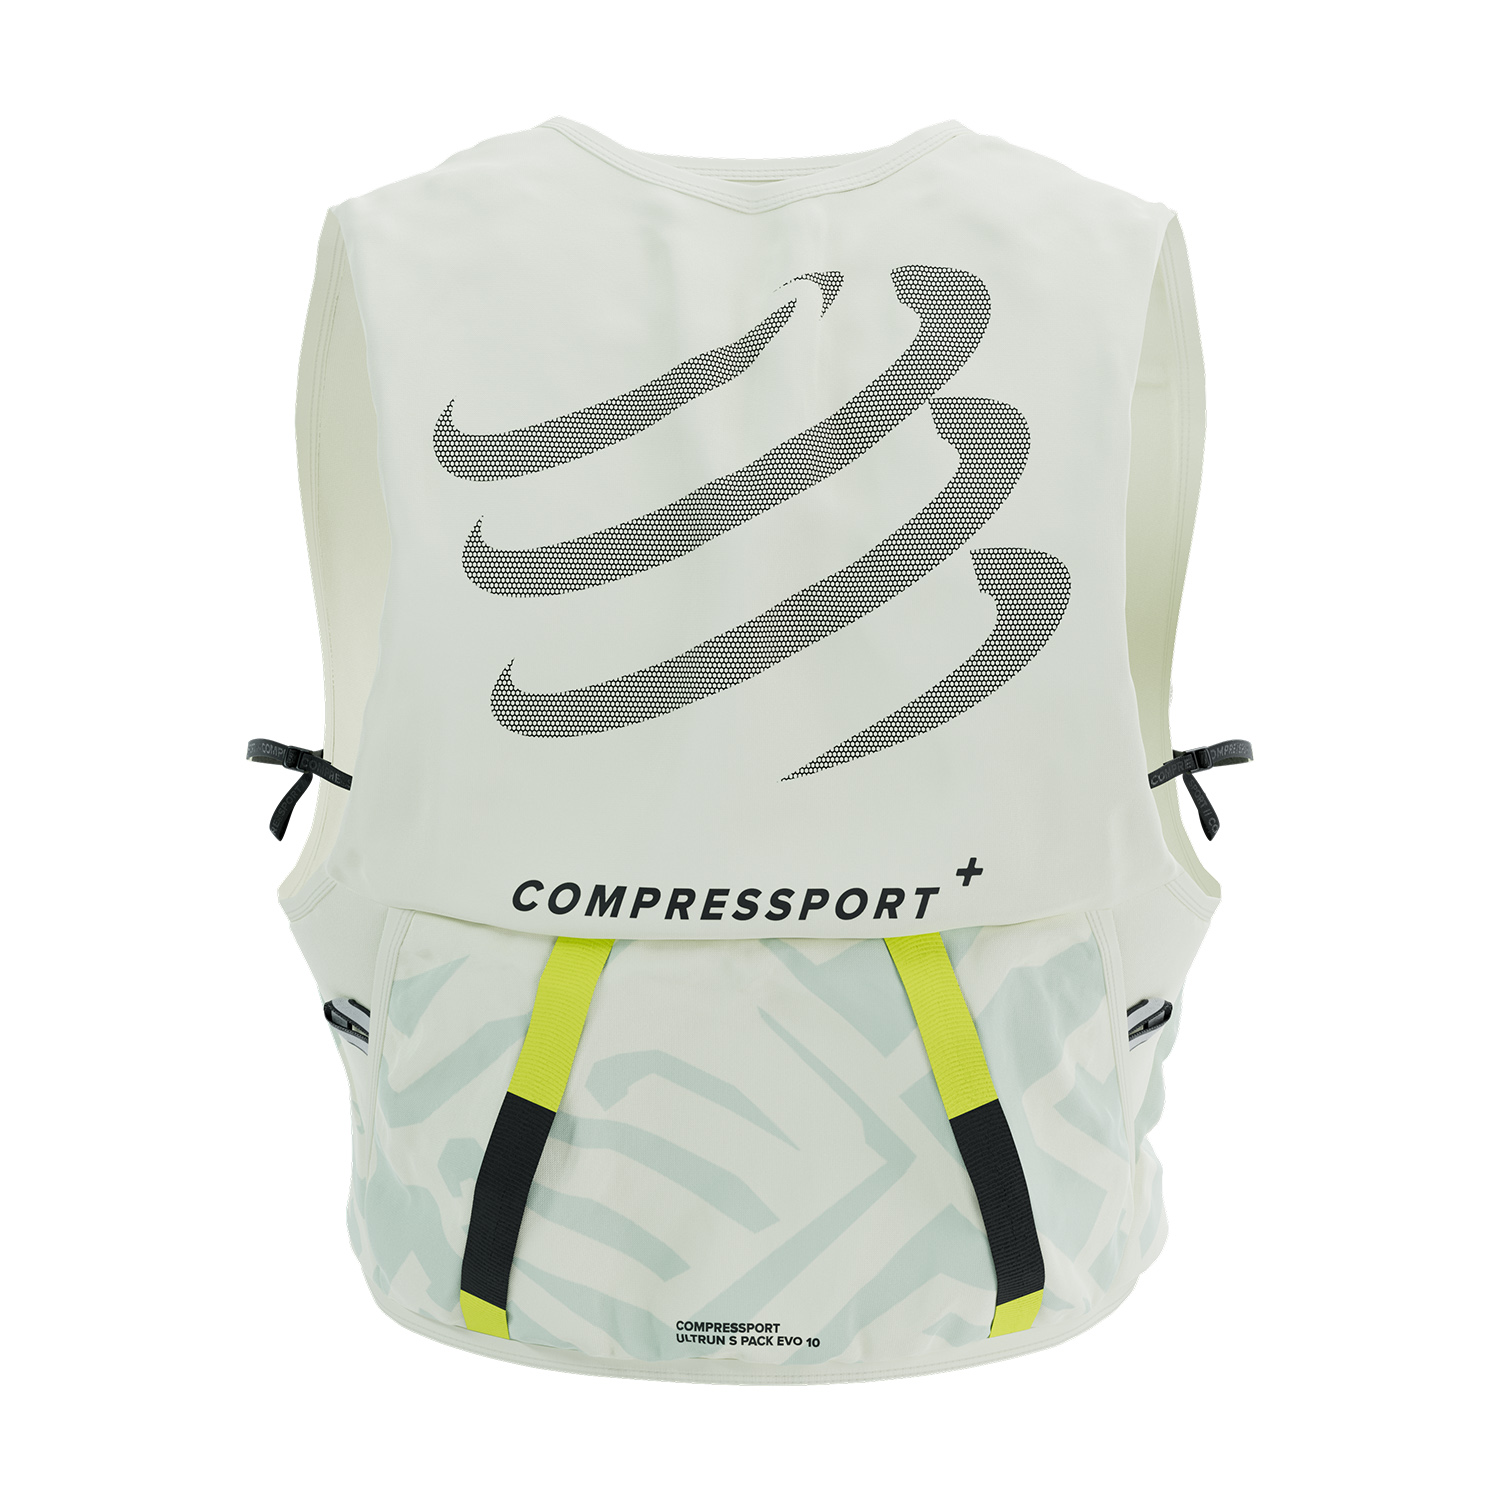 Compressport UltRun Pack Evo 10 Backpack - Sugar/Ice Print